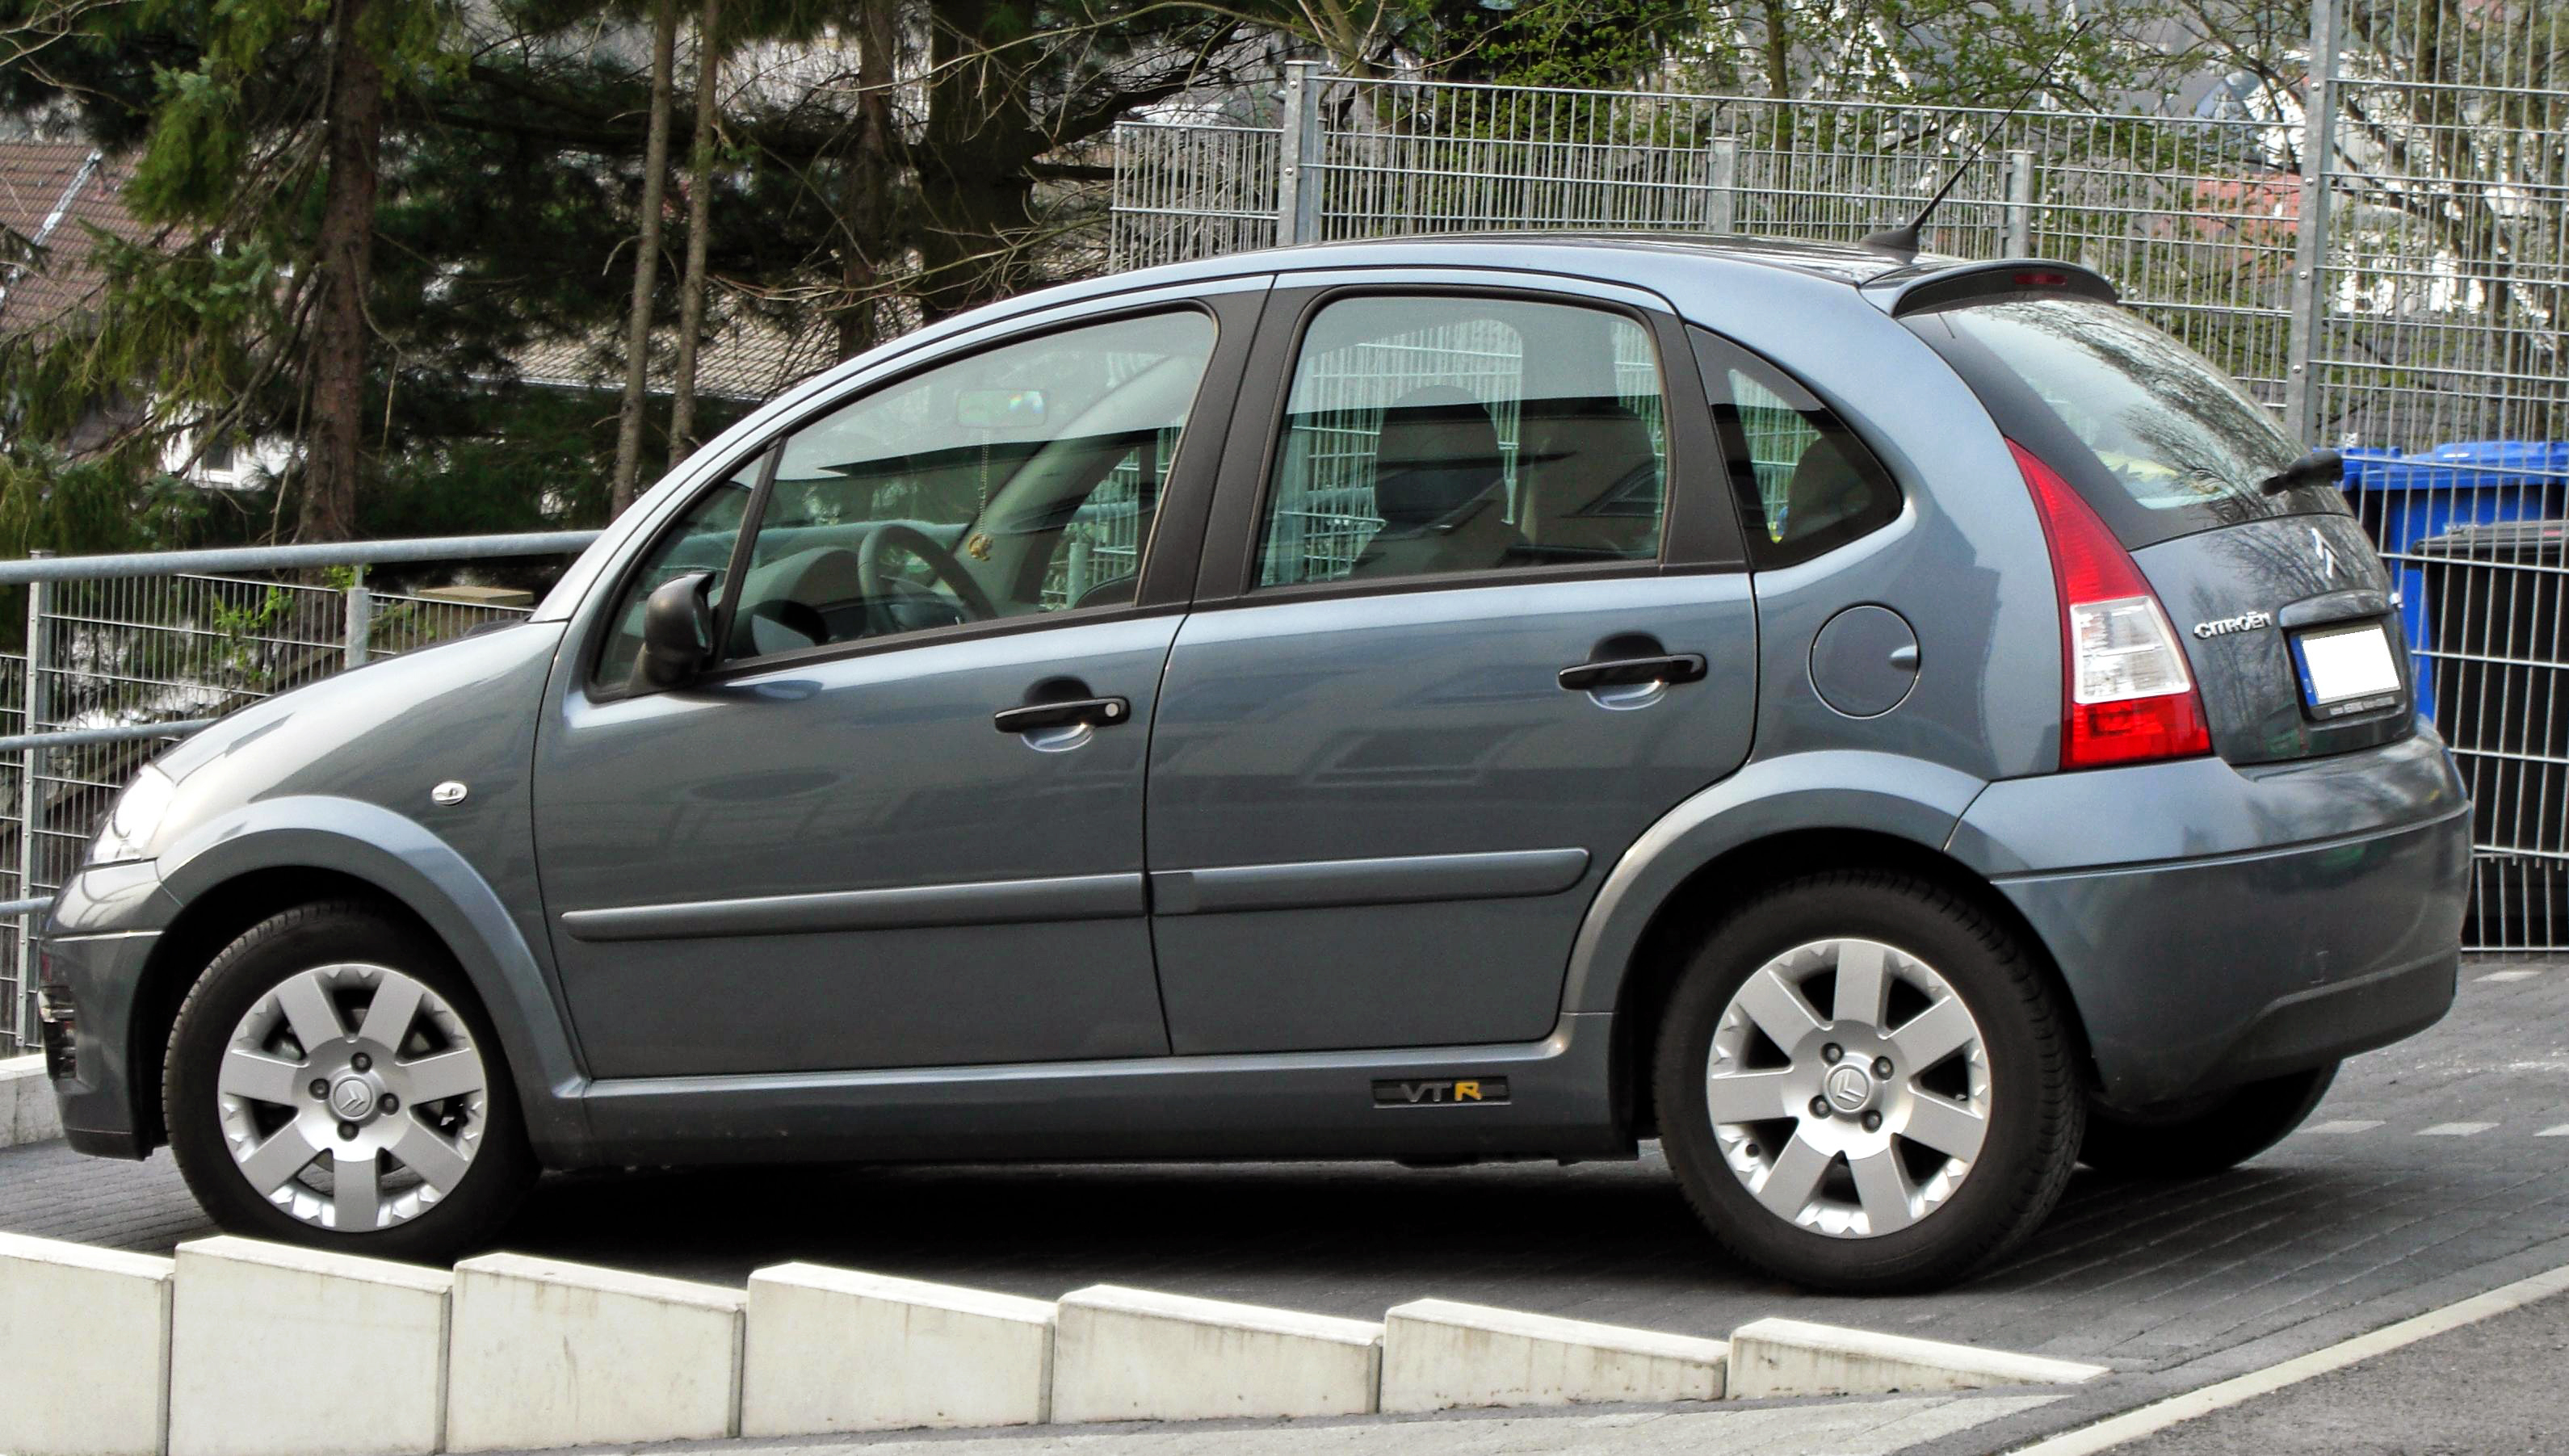 Citroën C3 VTR